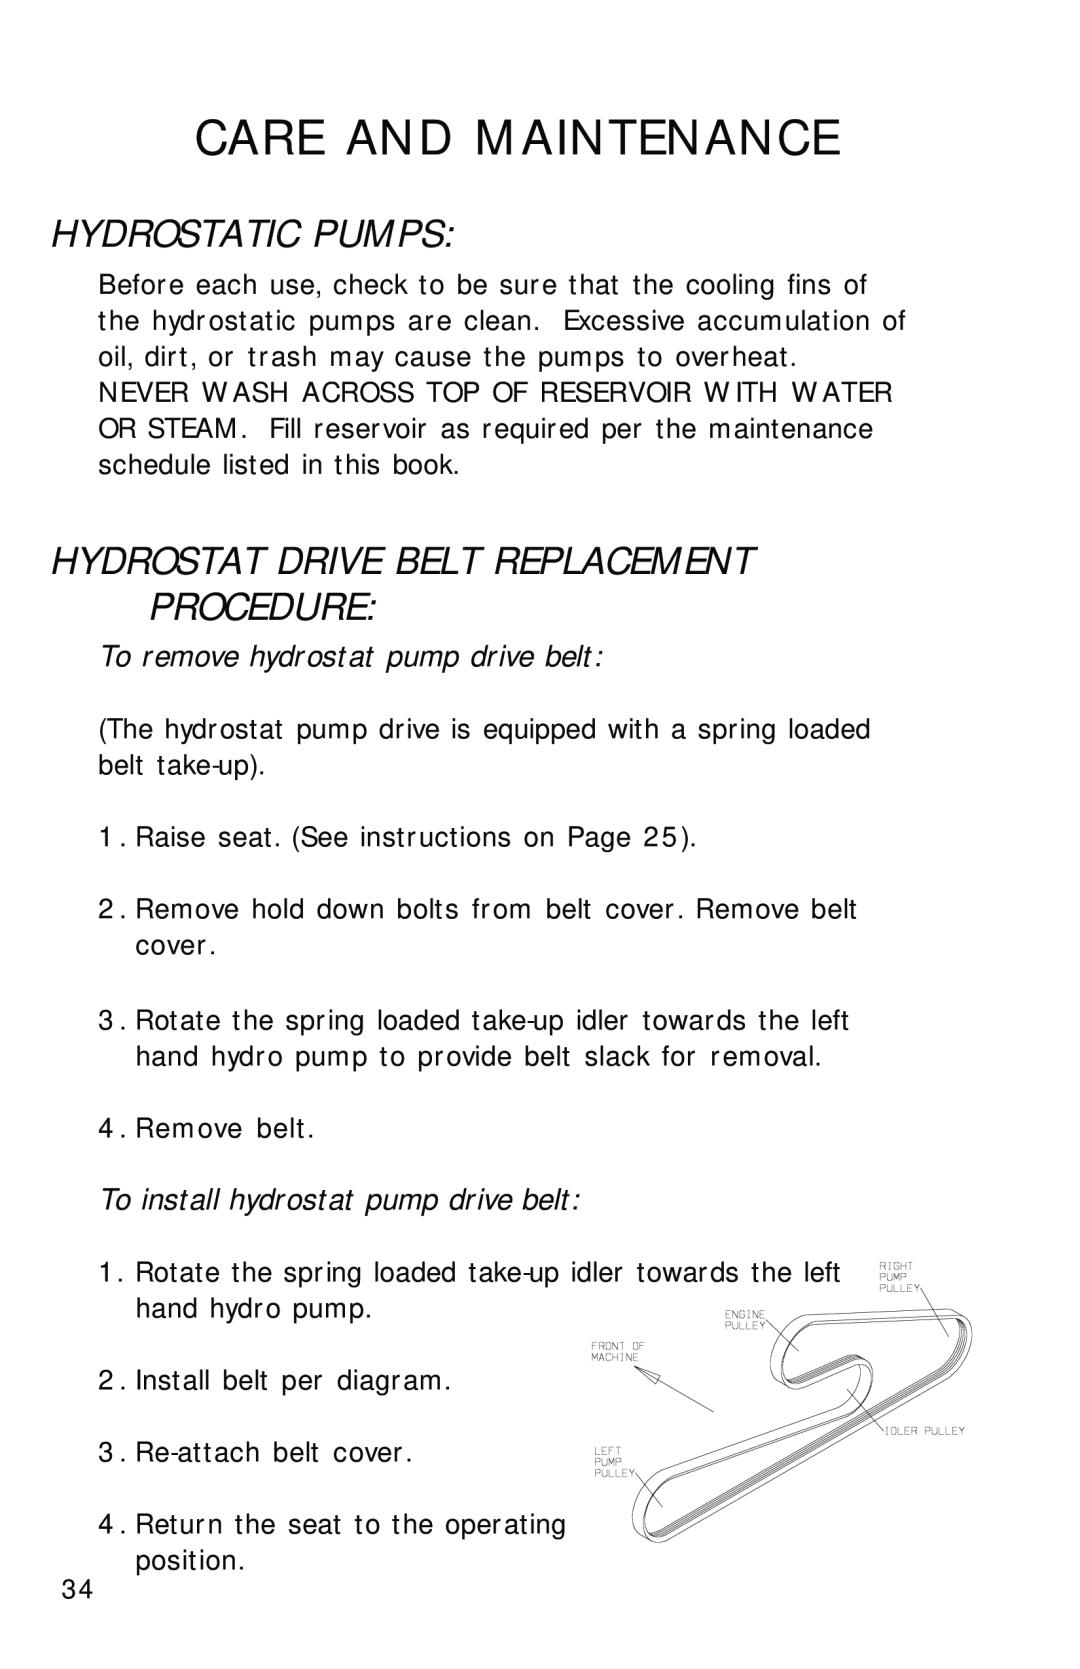 Dixon 2700 manual Hydrostatic Pumps, Hydrostat Drive Belt Replacement Procedure, Care And Maintenance 